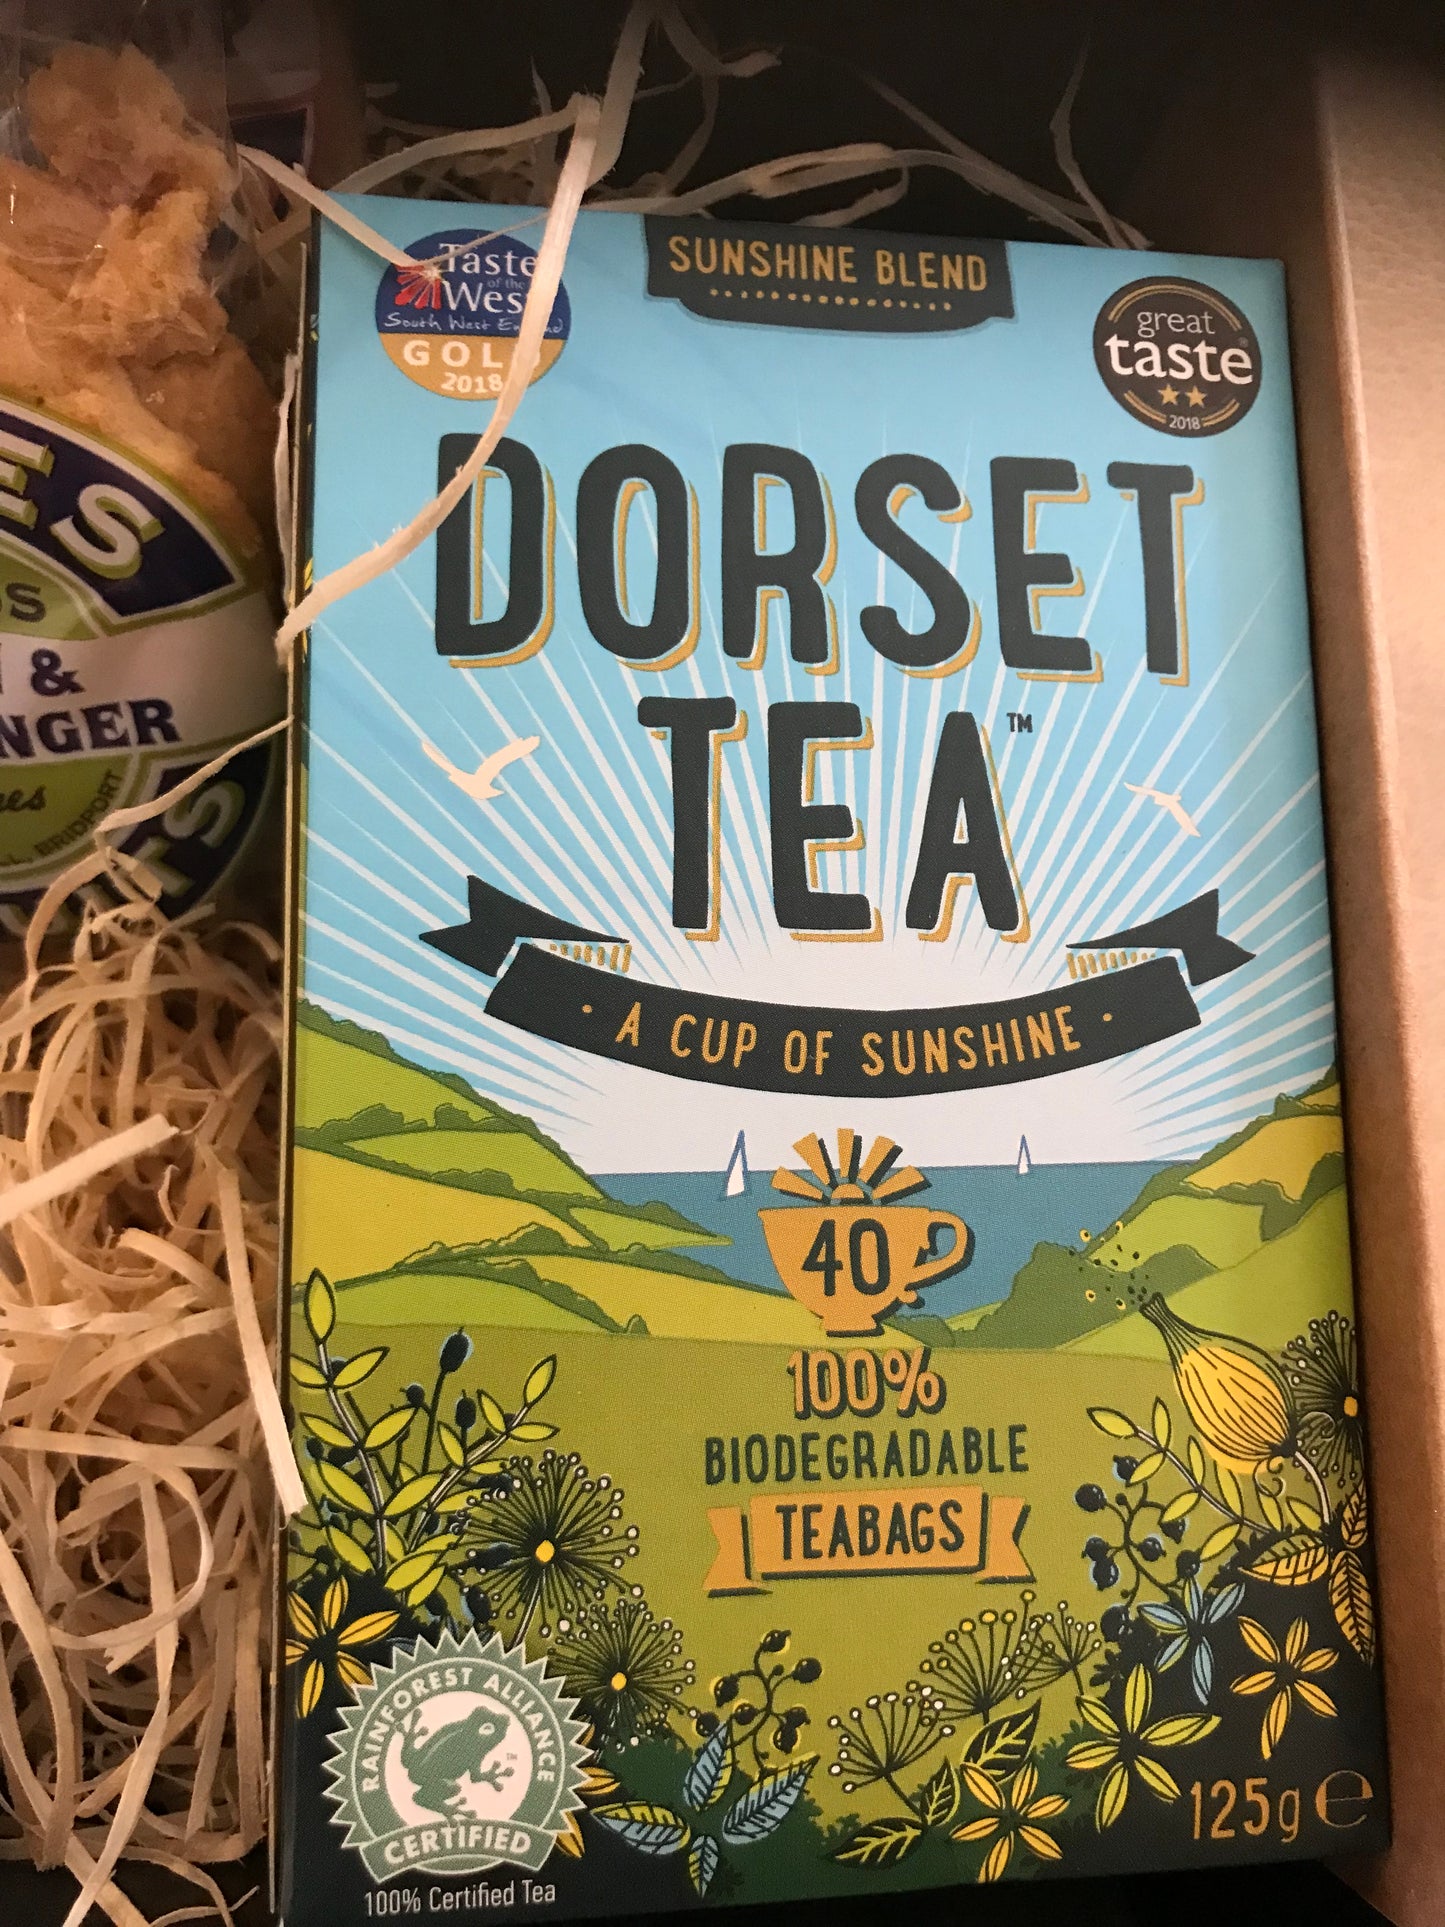 Dorset Hamper Delights